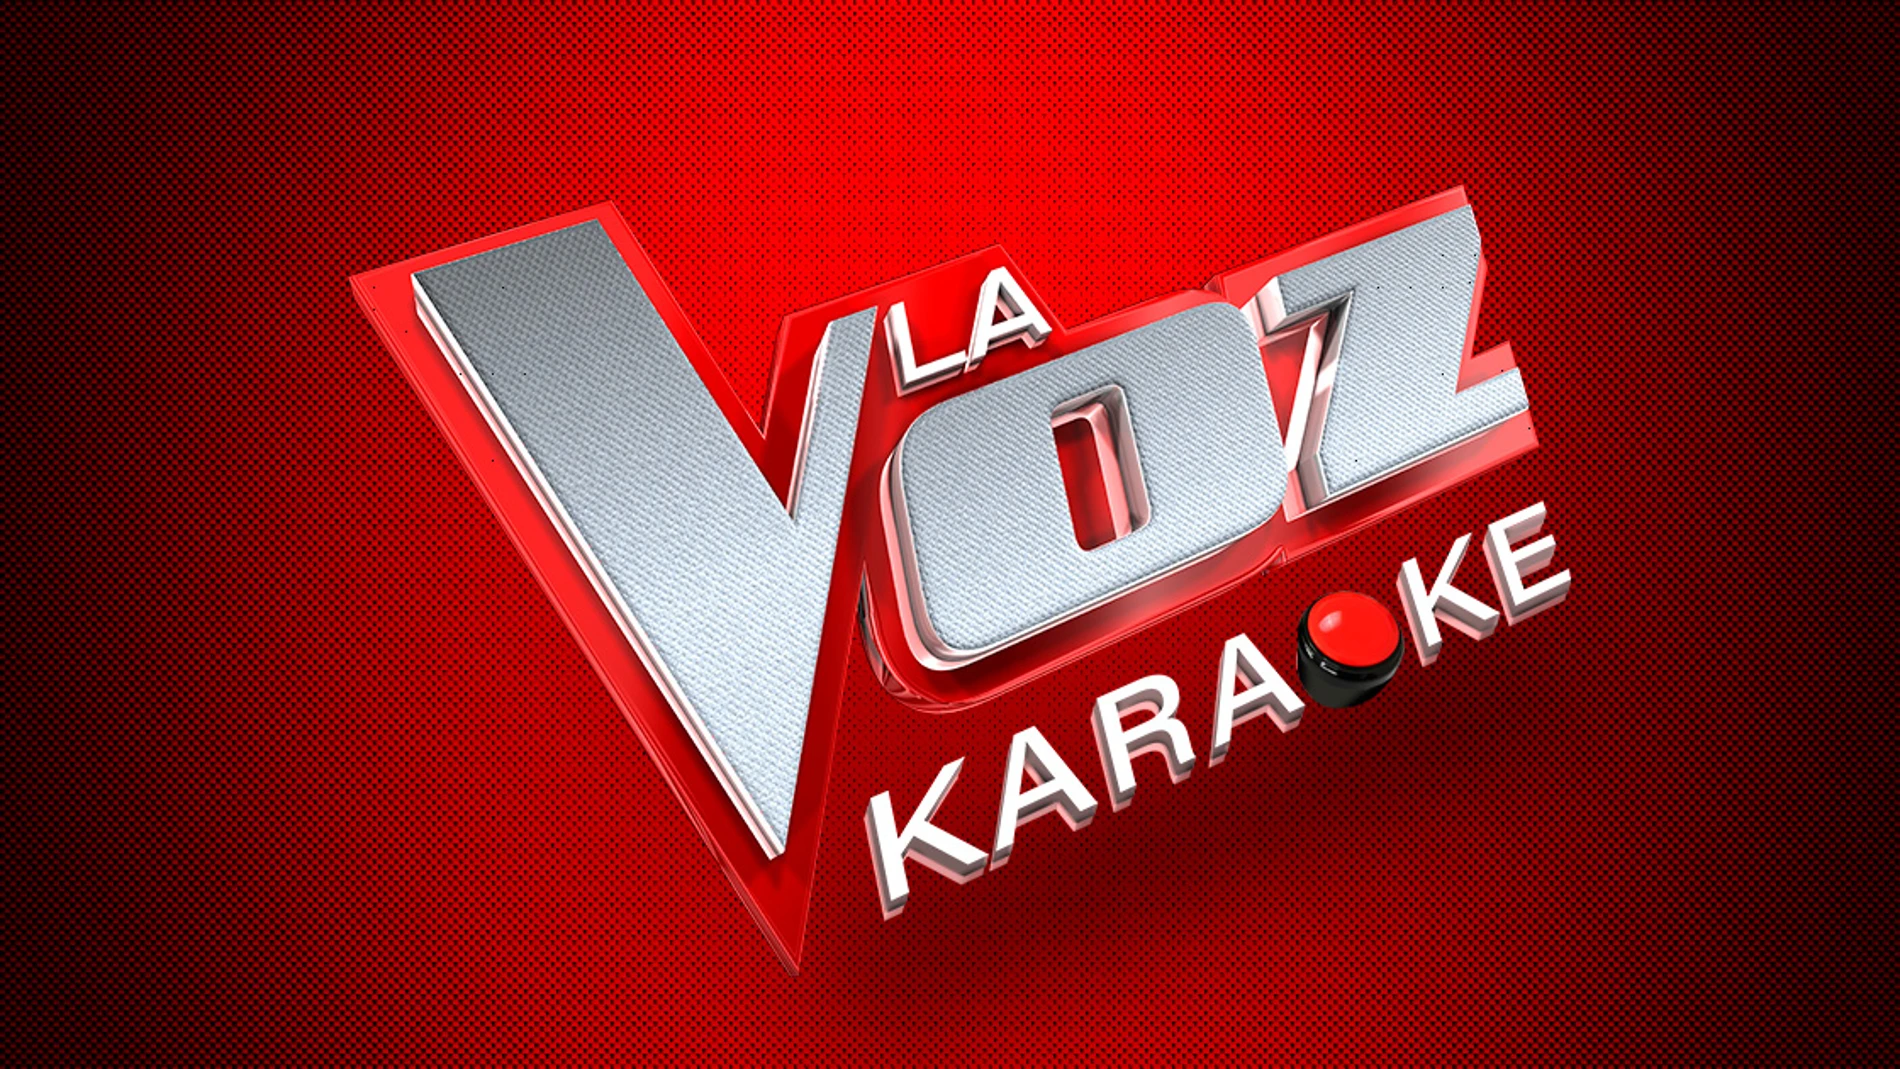 Llega a Madrid el primer Karaoke Oficial de 'La Voz'